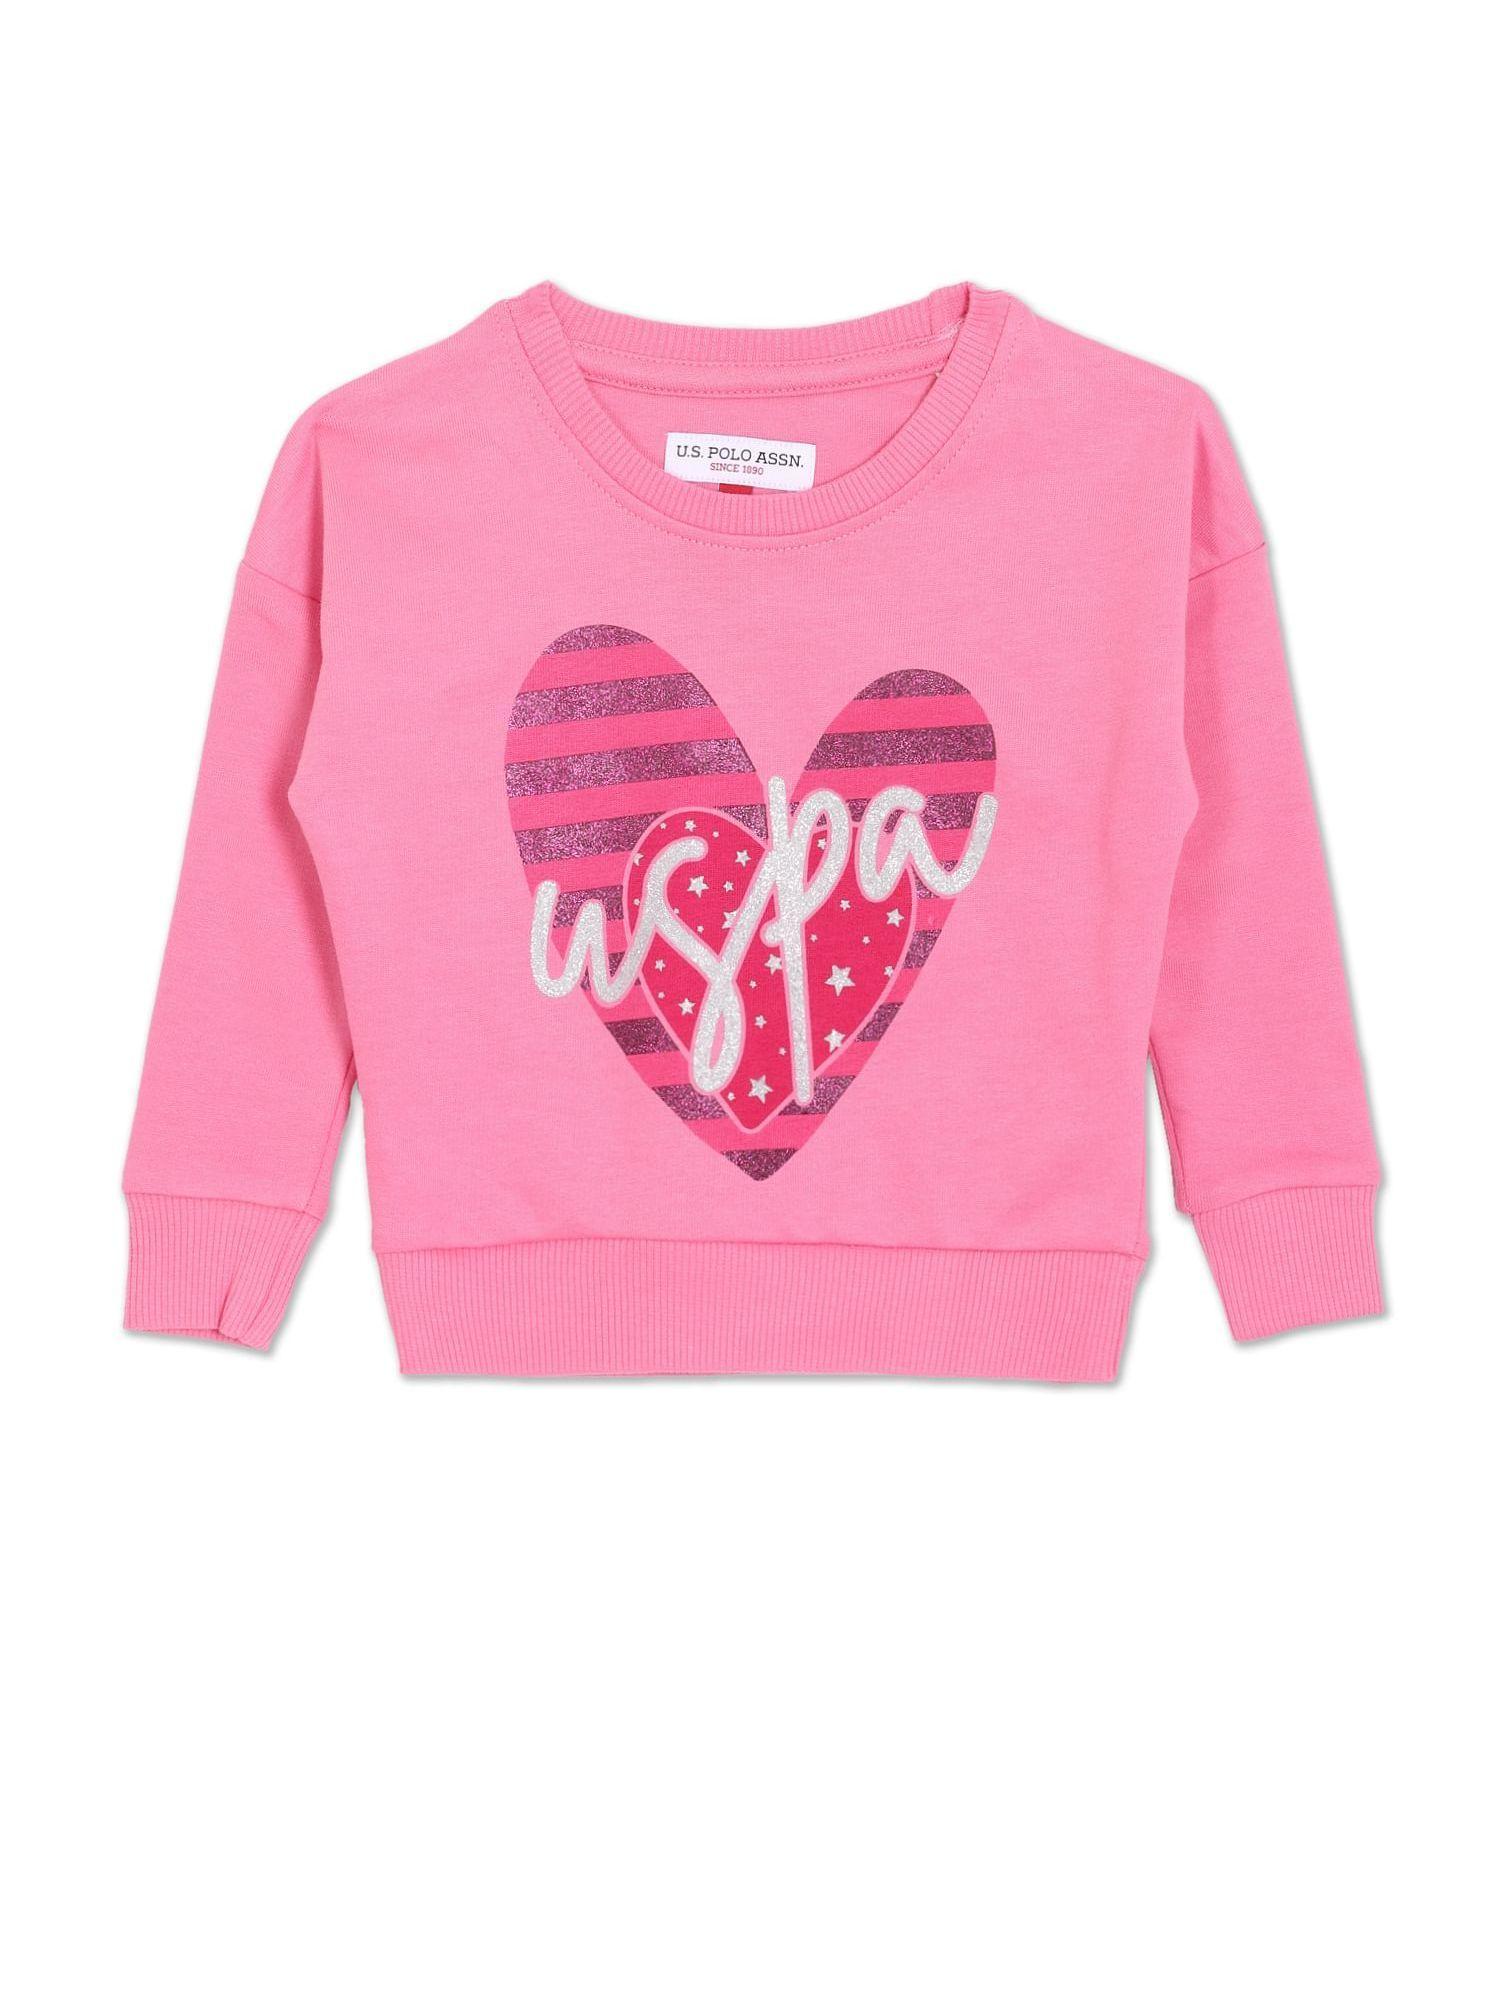 Girls Pink Crew Neck Printed Cotton Sweatshirt